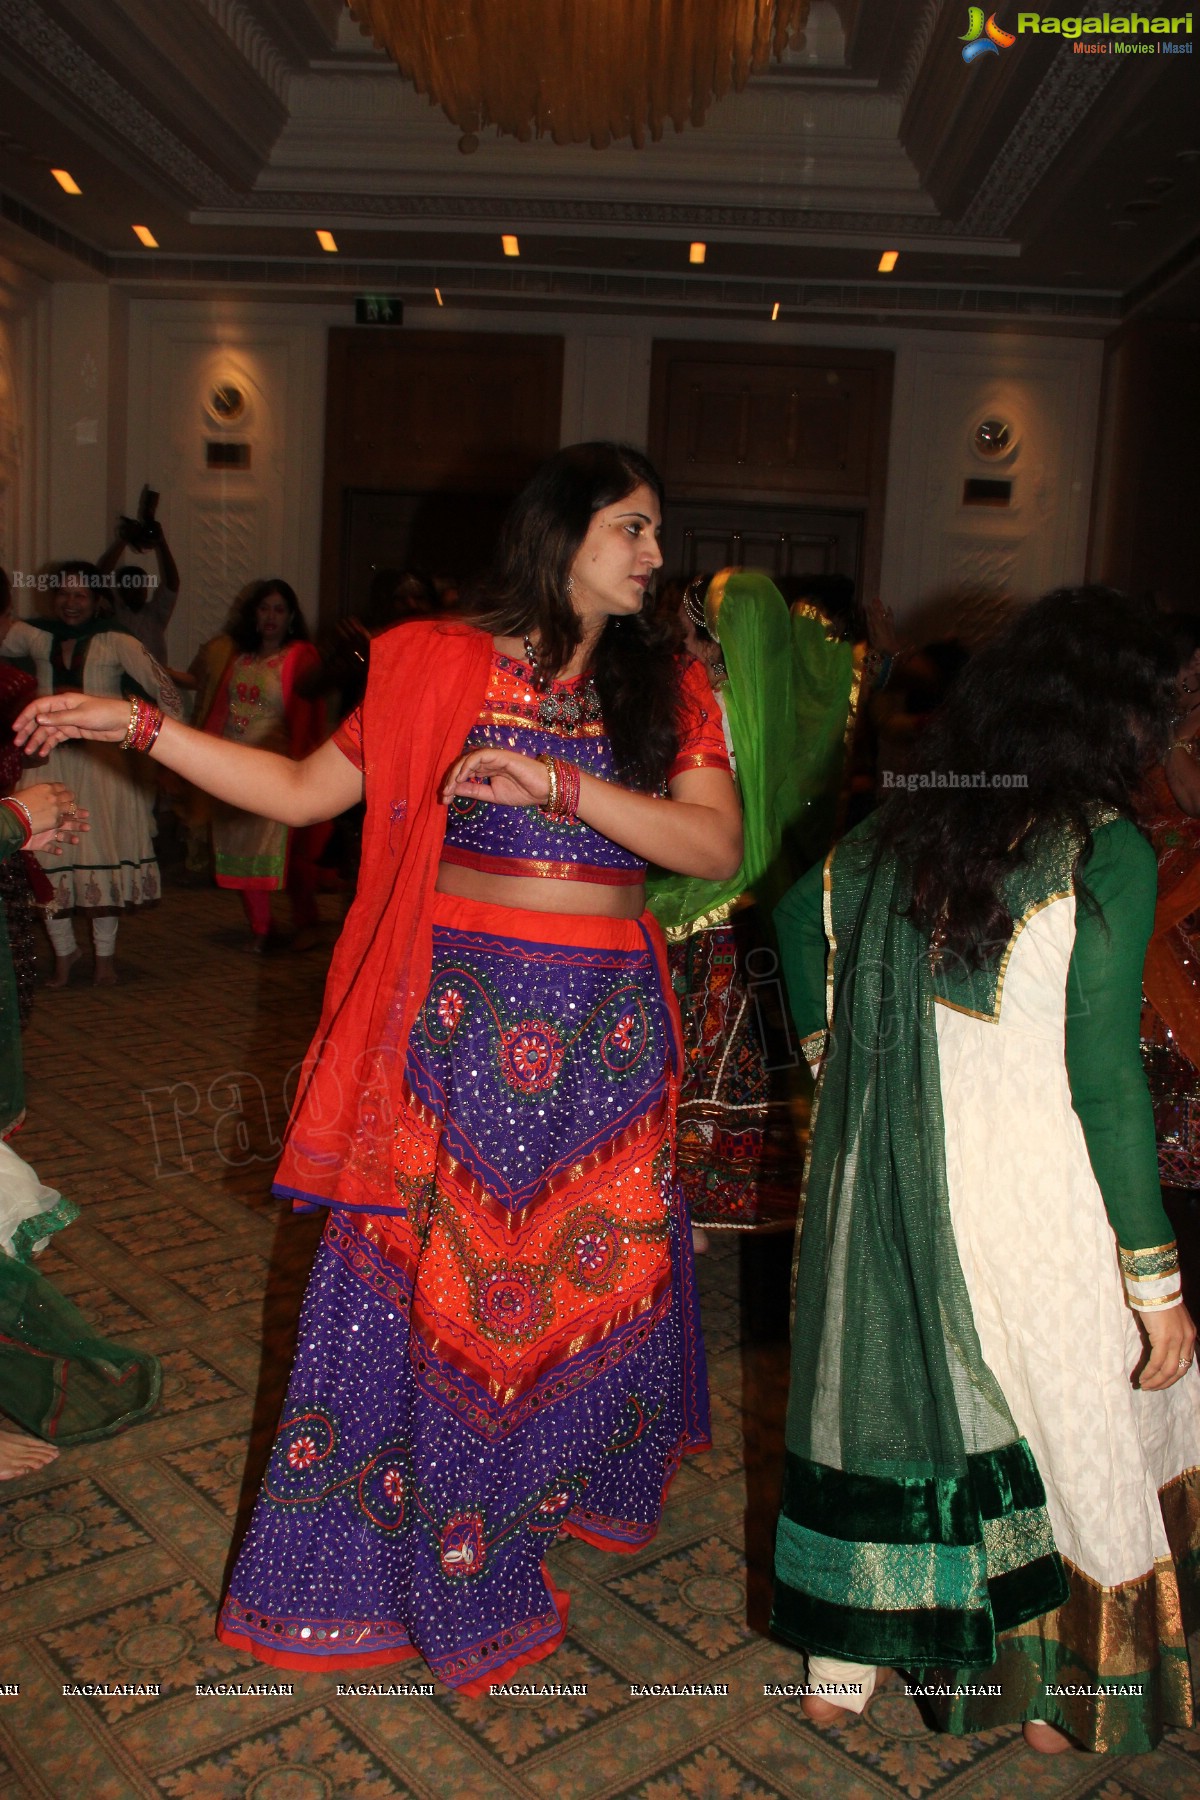 Hyderabad Kakatiya Ladies Club 'Dandiya 2013' - Choreographed by Bina Mehta